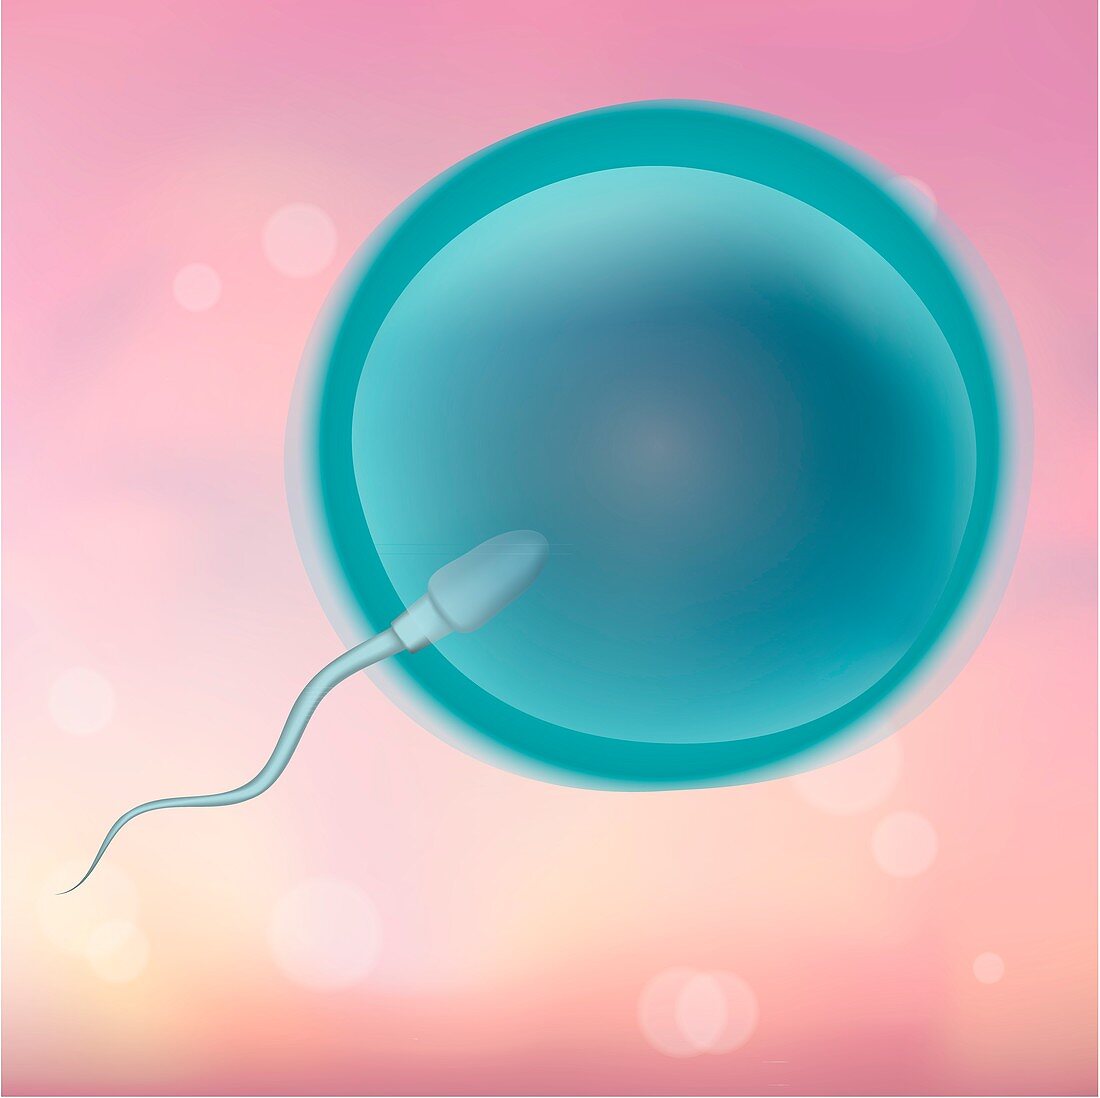 Sperm fertilizing an egg, illustration